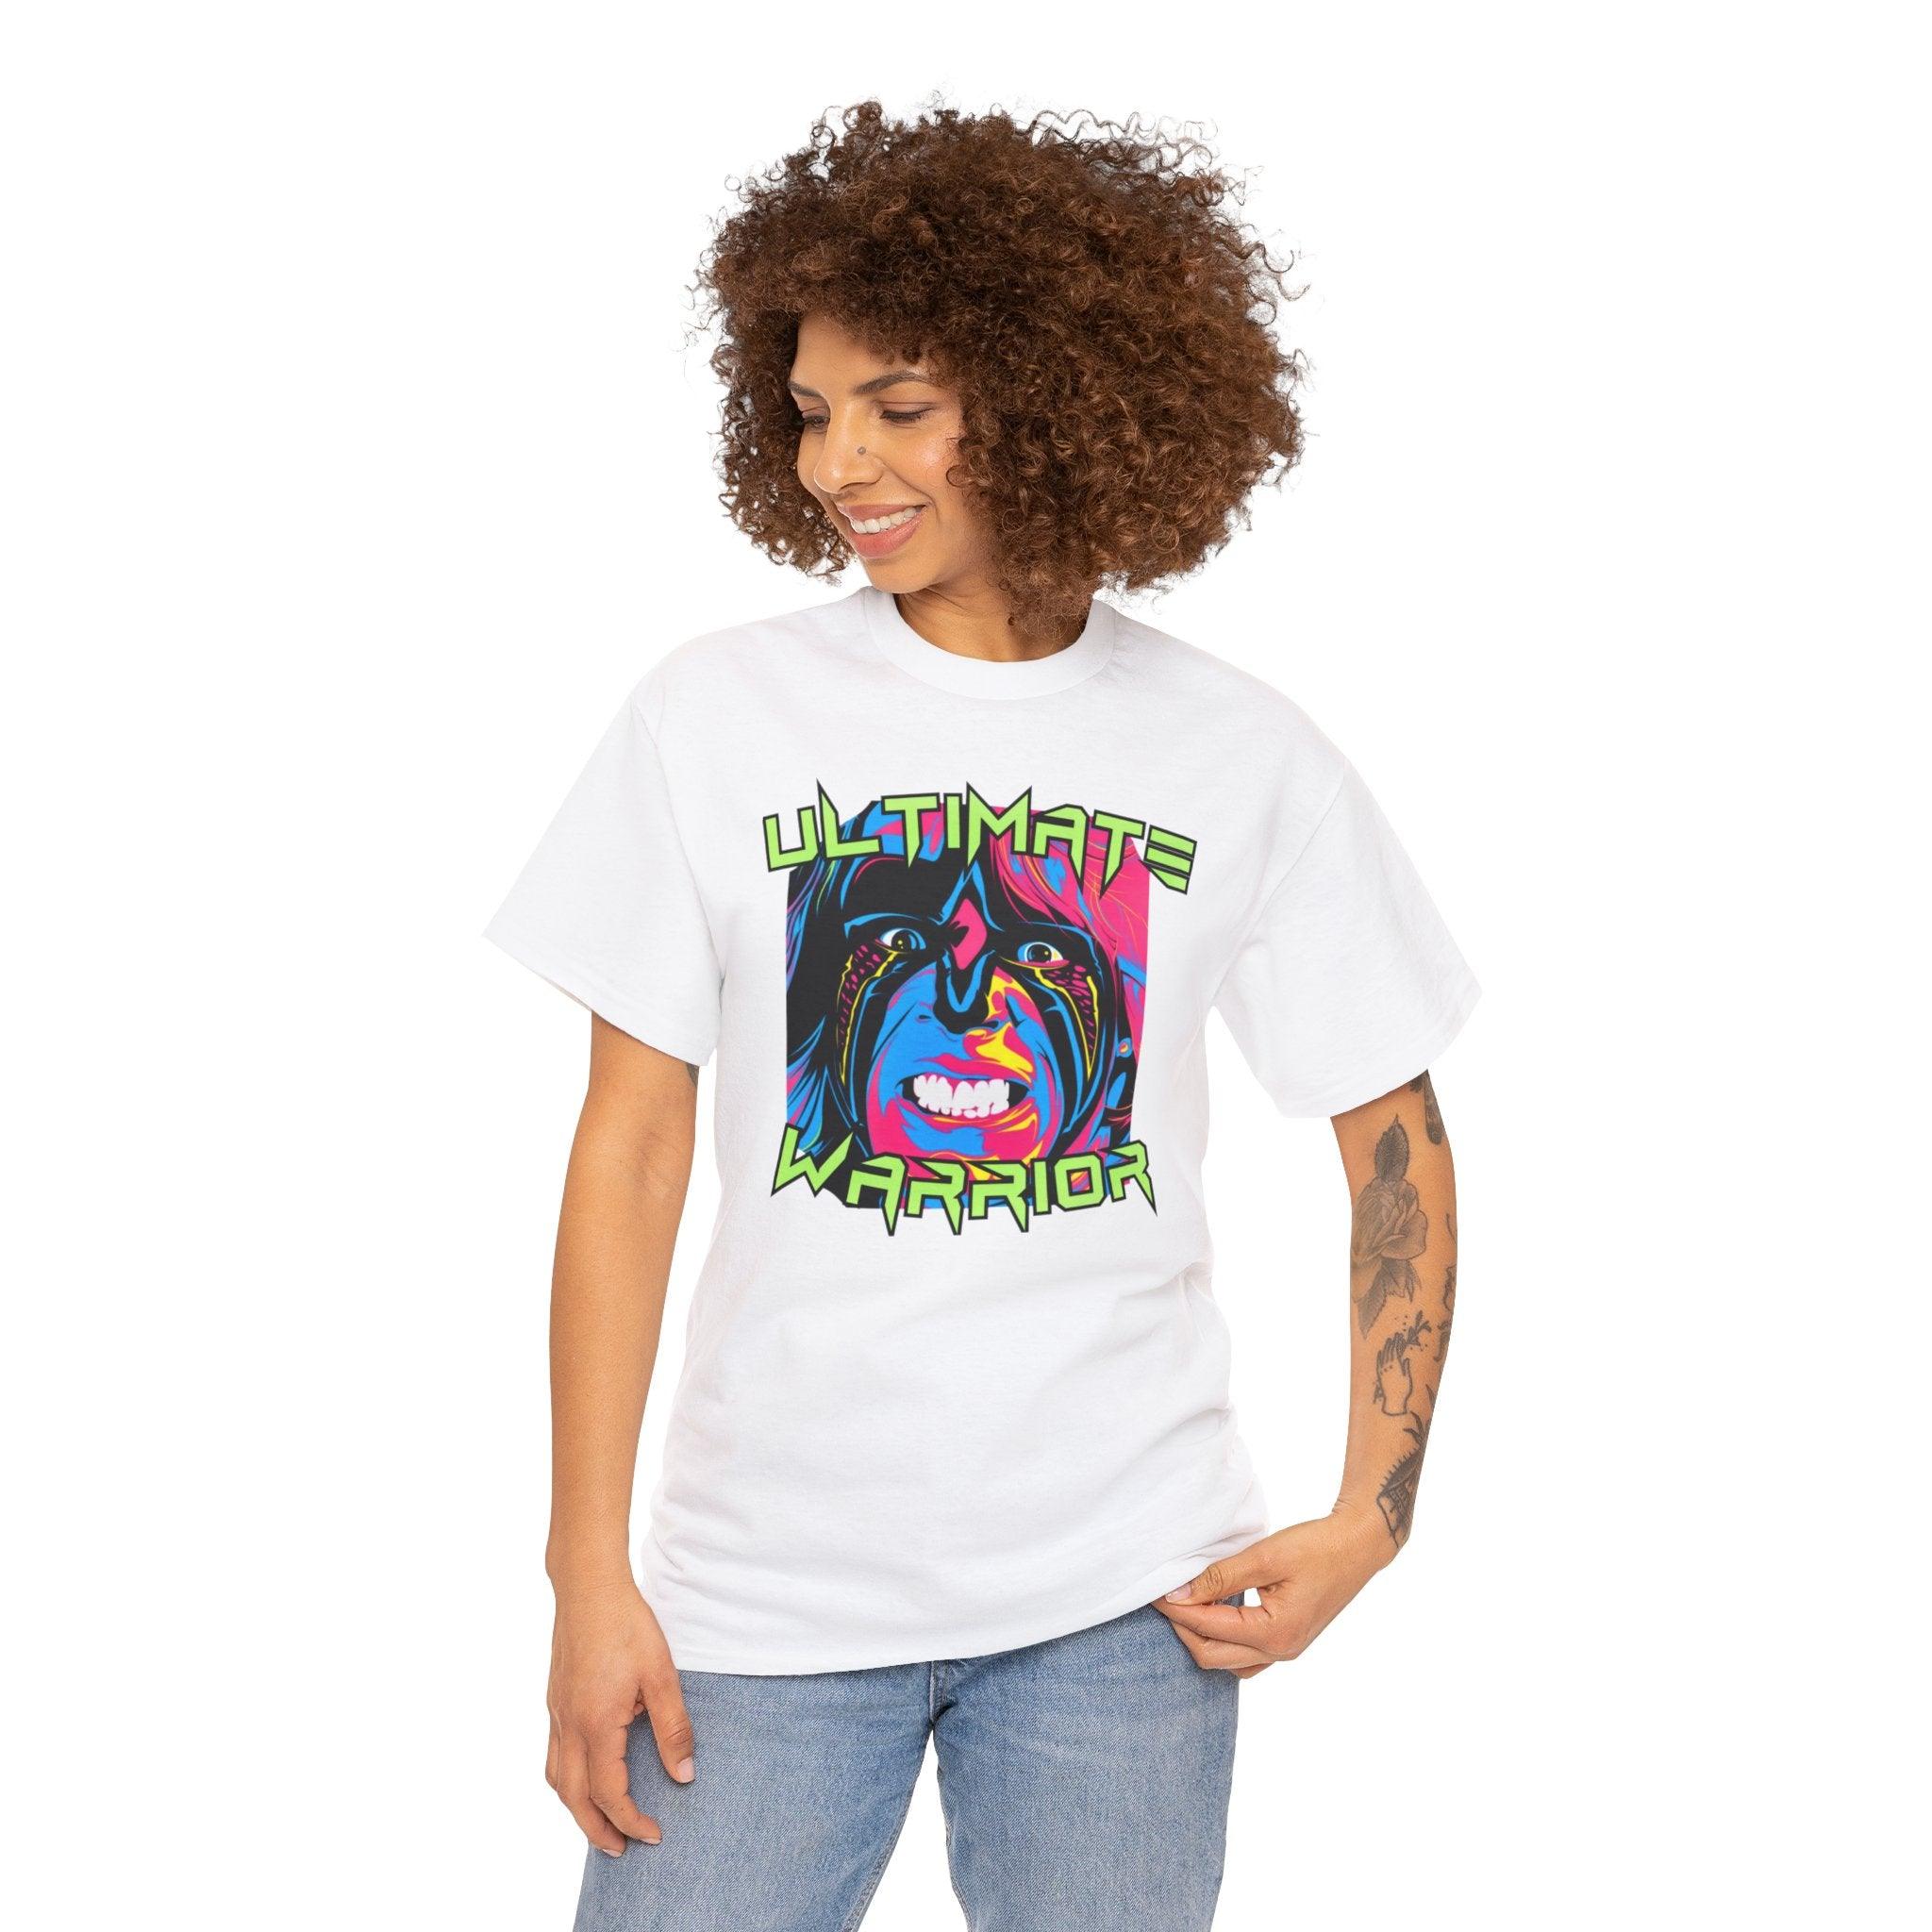 Ultimate Warrior T-shirt - Epic Shirts 403